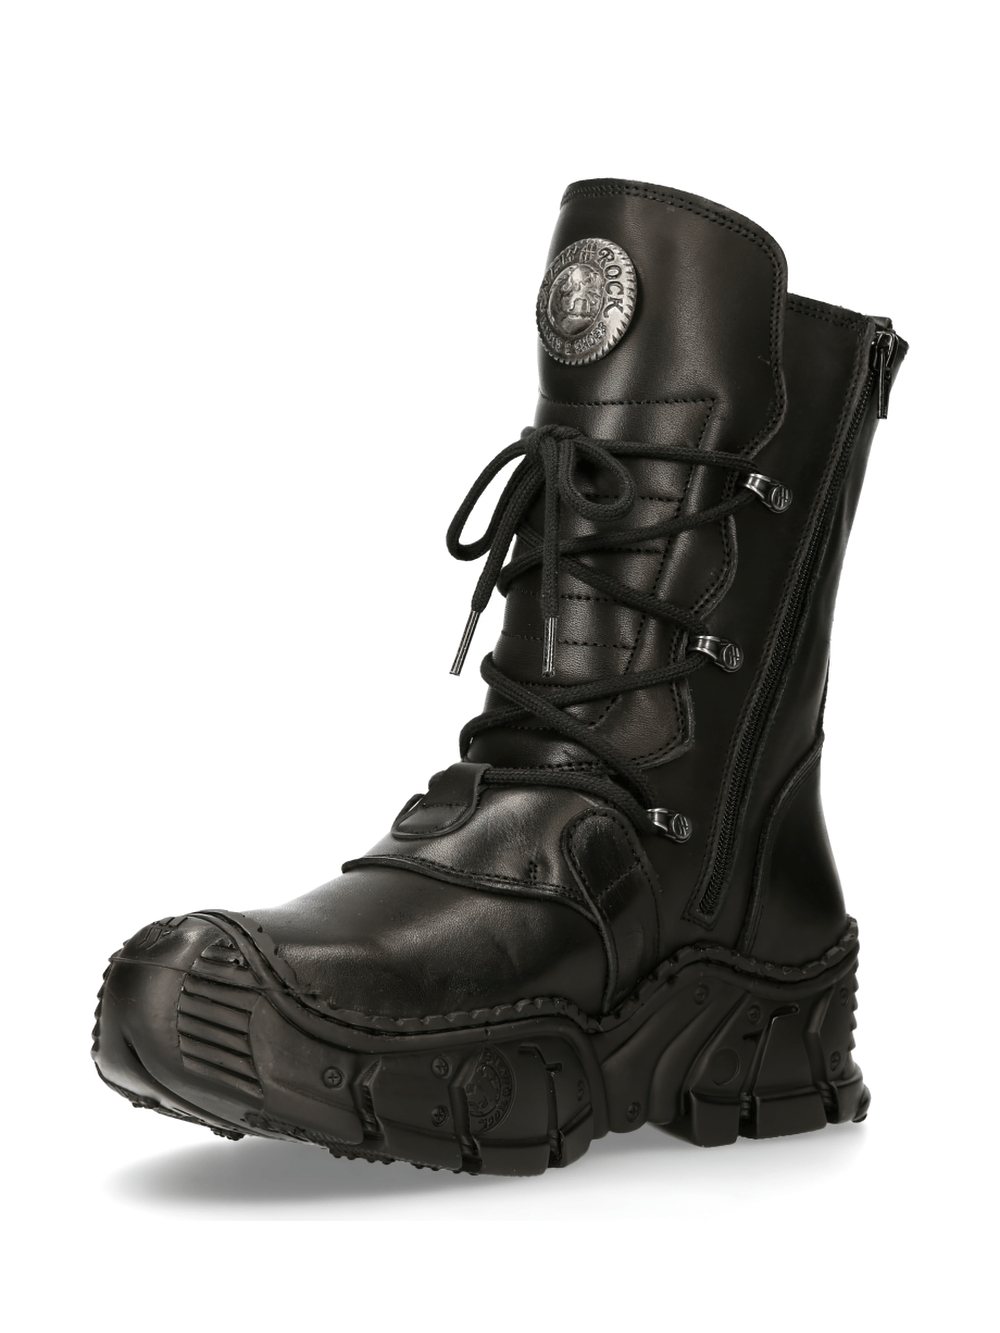 NEW ROCK Unisex Gothic Black Buckled Gothic Impact Boots